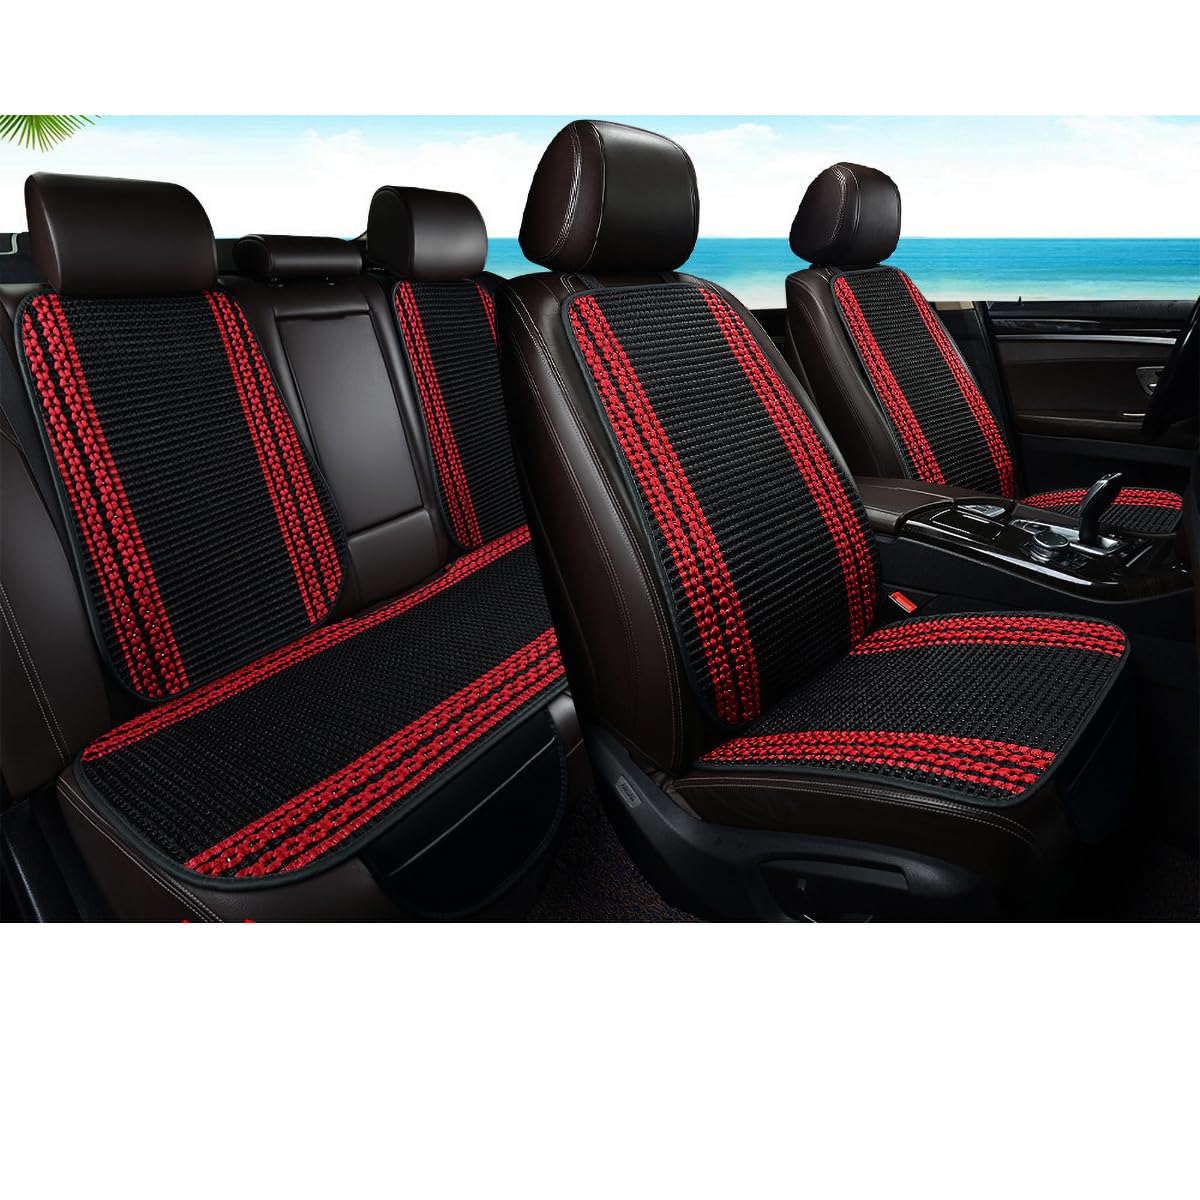 ASNAT Belüfteter Autositzbezug den Sommer für Dodge Avenger, Atmungsaktiv Und Bequem, Anti Rutsch Autositzschoner,A-black-7PCS von ASNAT